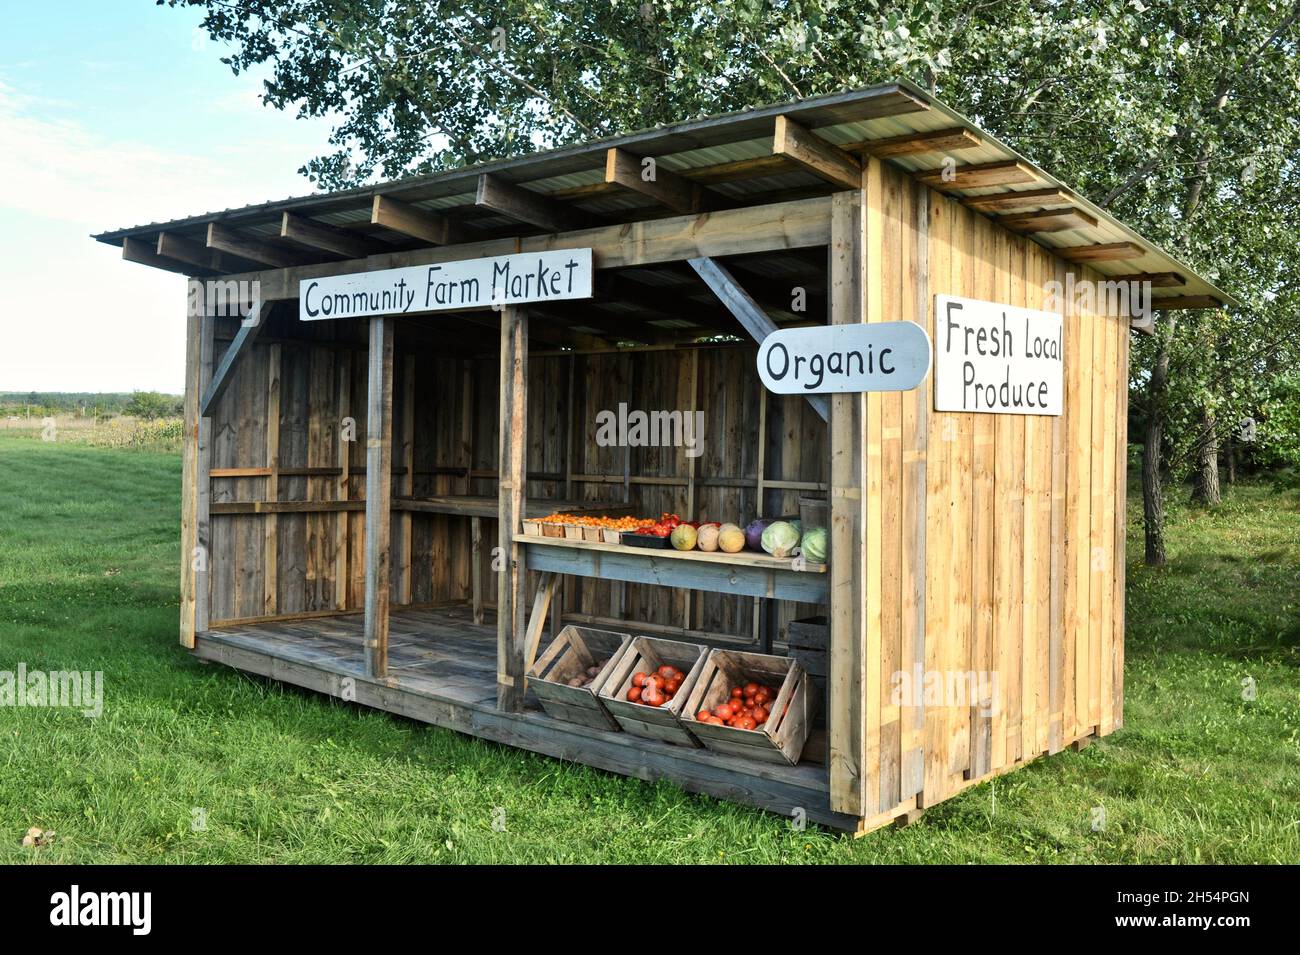 Community Farm Market Roadside Stand Featuring Fresh Local Organic